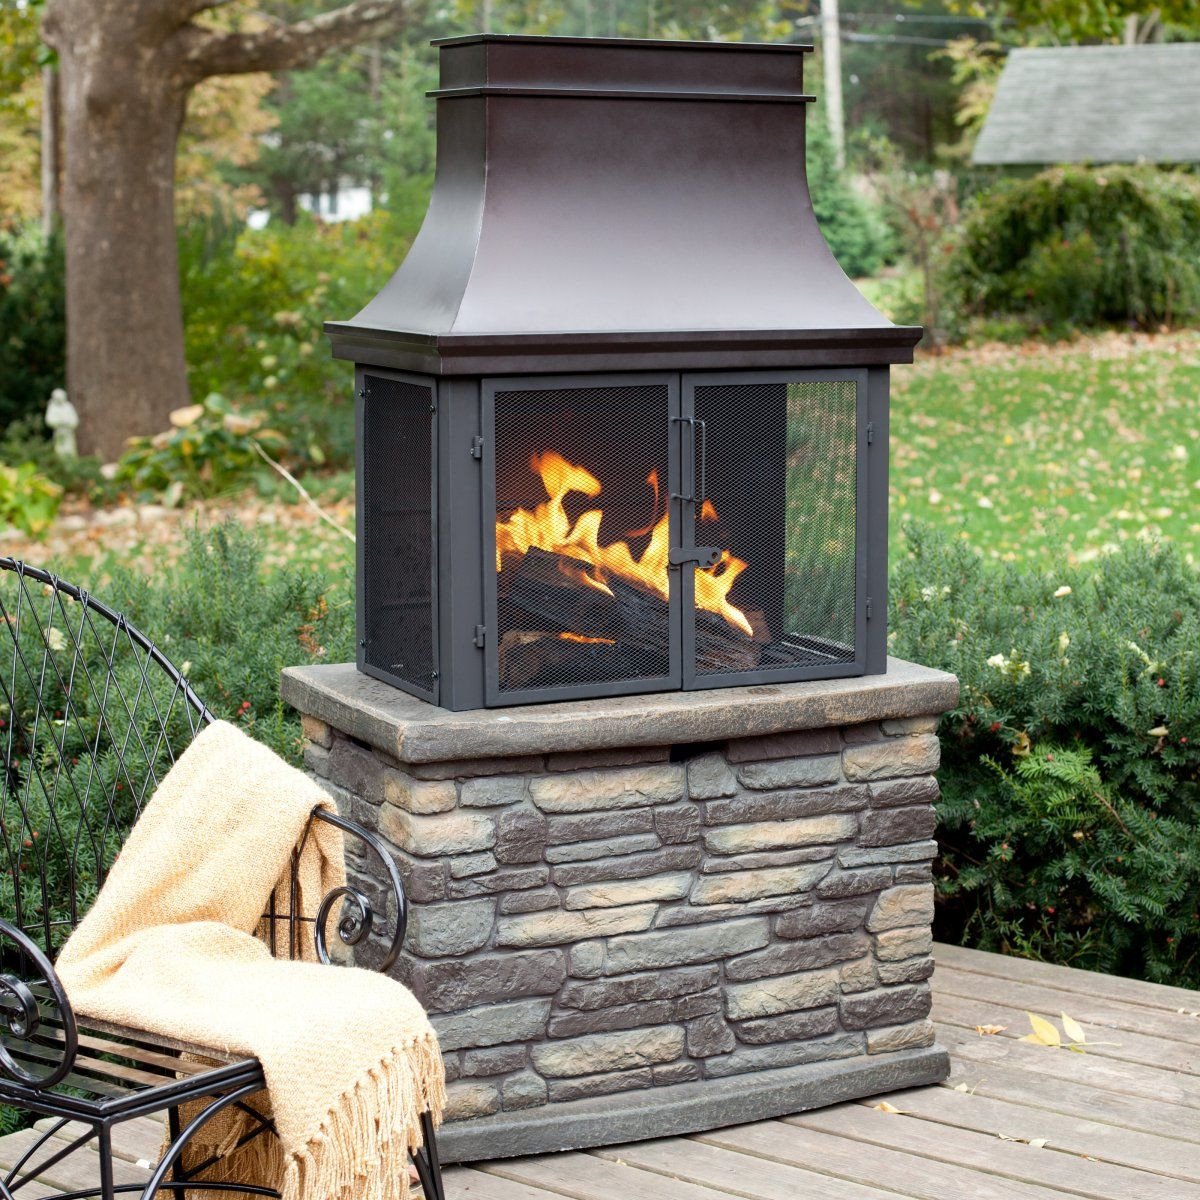 DIY Chiminea Outdoor Fireplace
 Bond Wood Burning Fireplace Outdoor Fireplaces